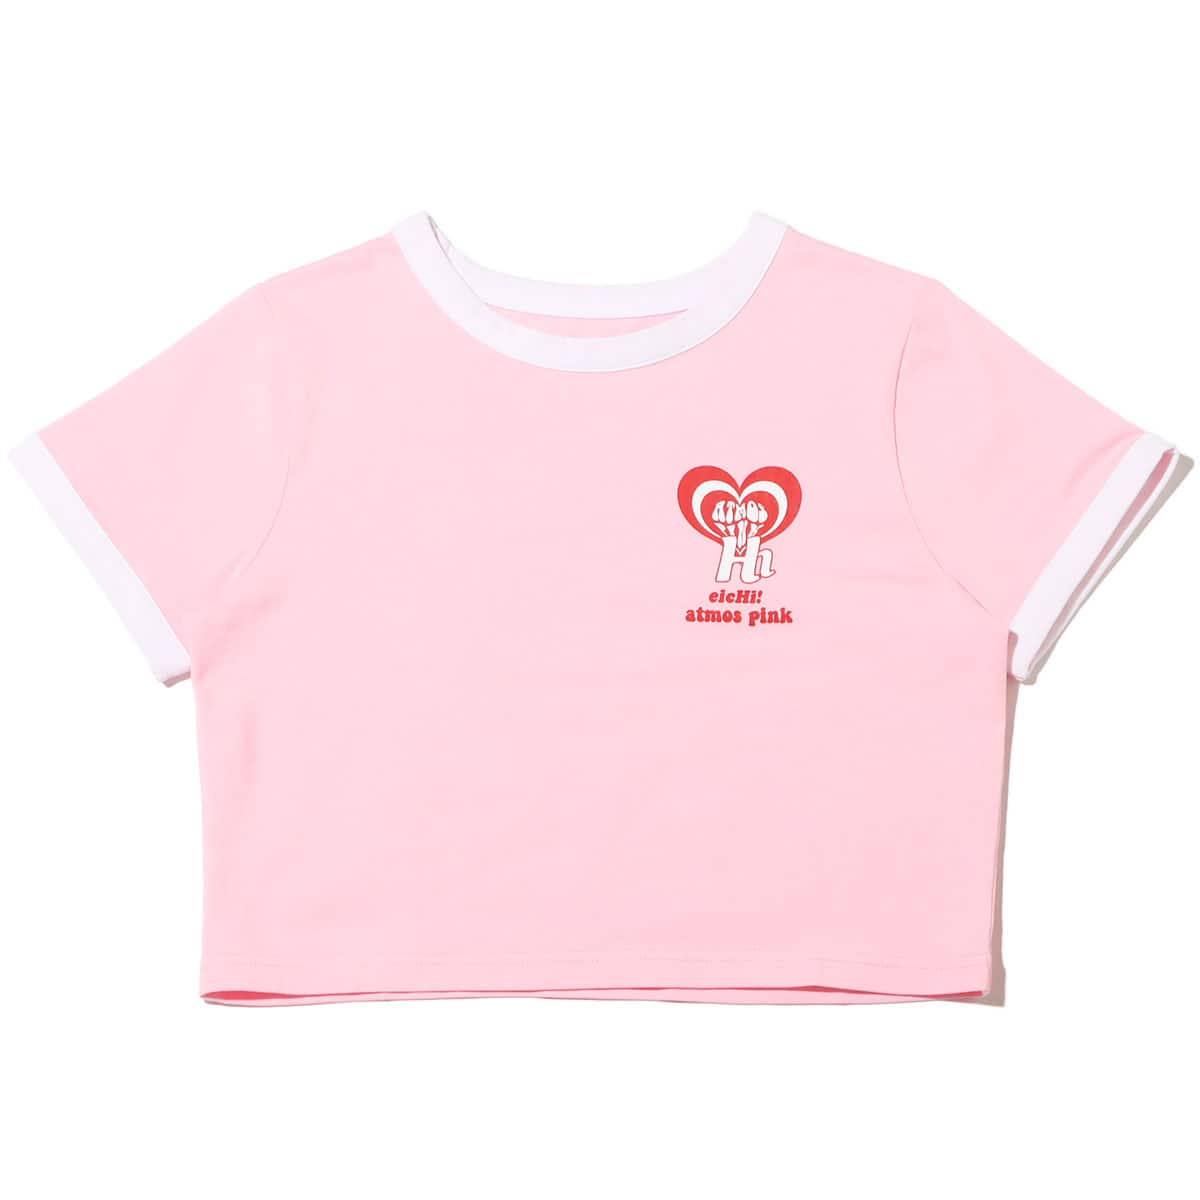 atmos pink × eicHi! HOnOKA Tシャツ PINK 23SP-Iアトモスピンク